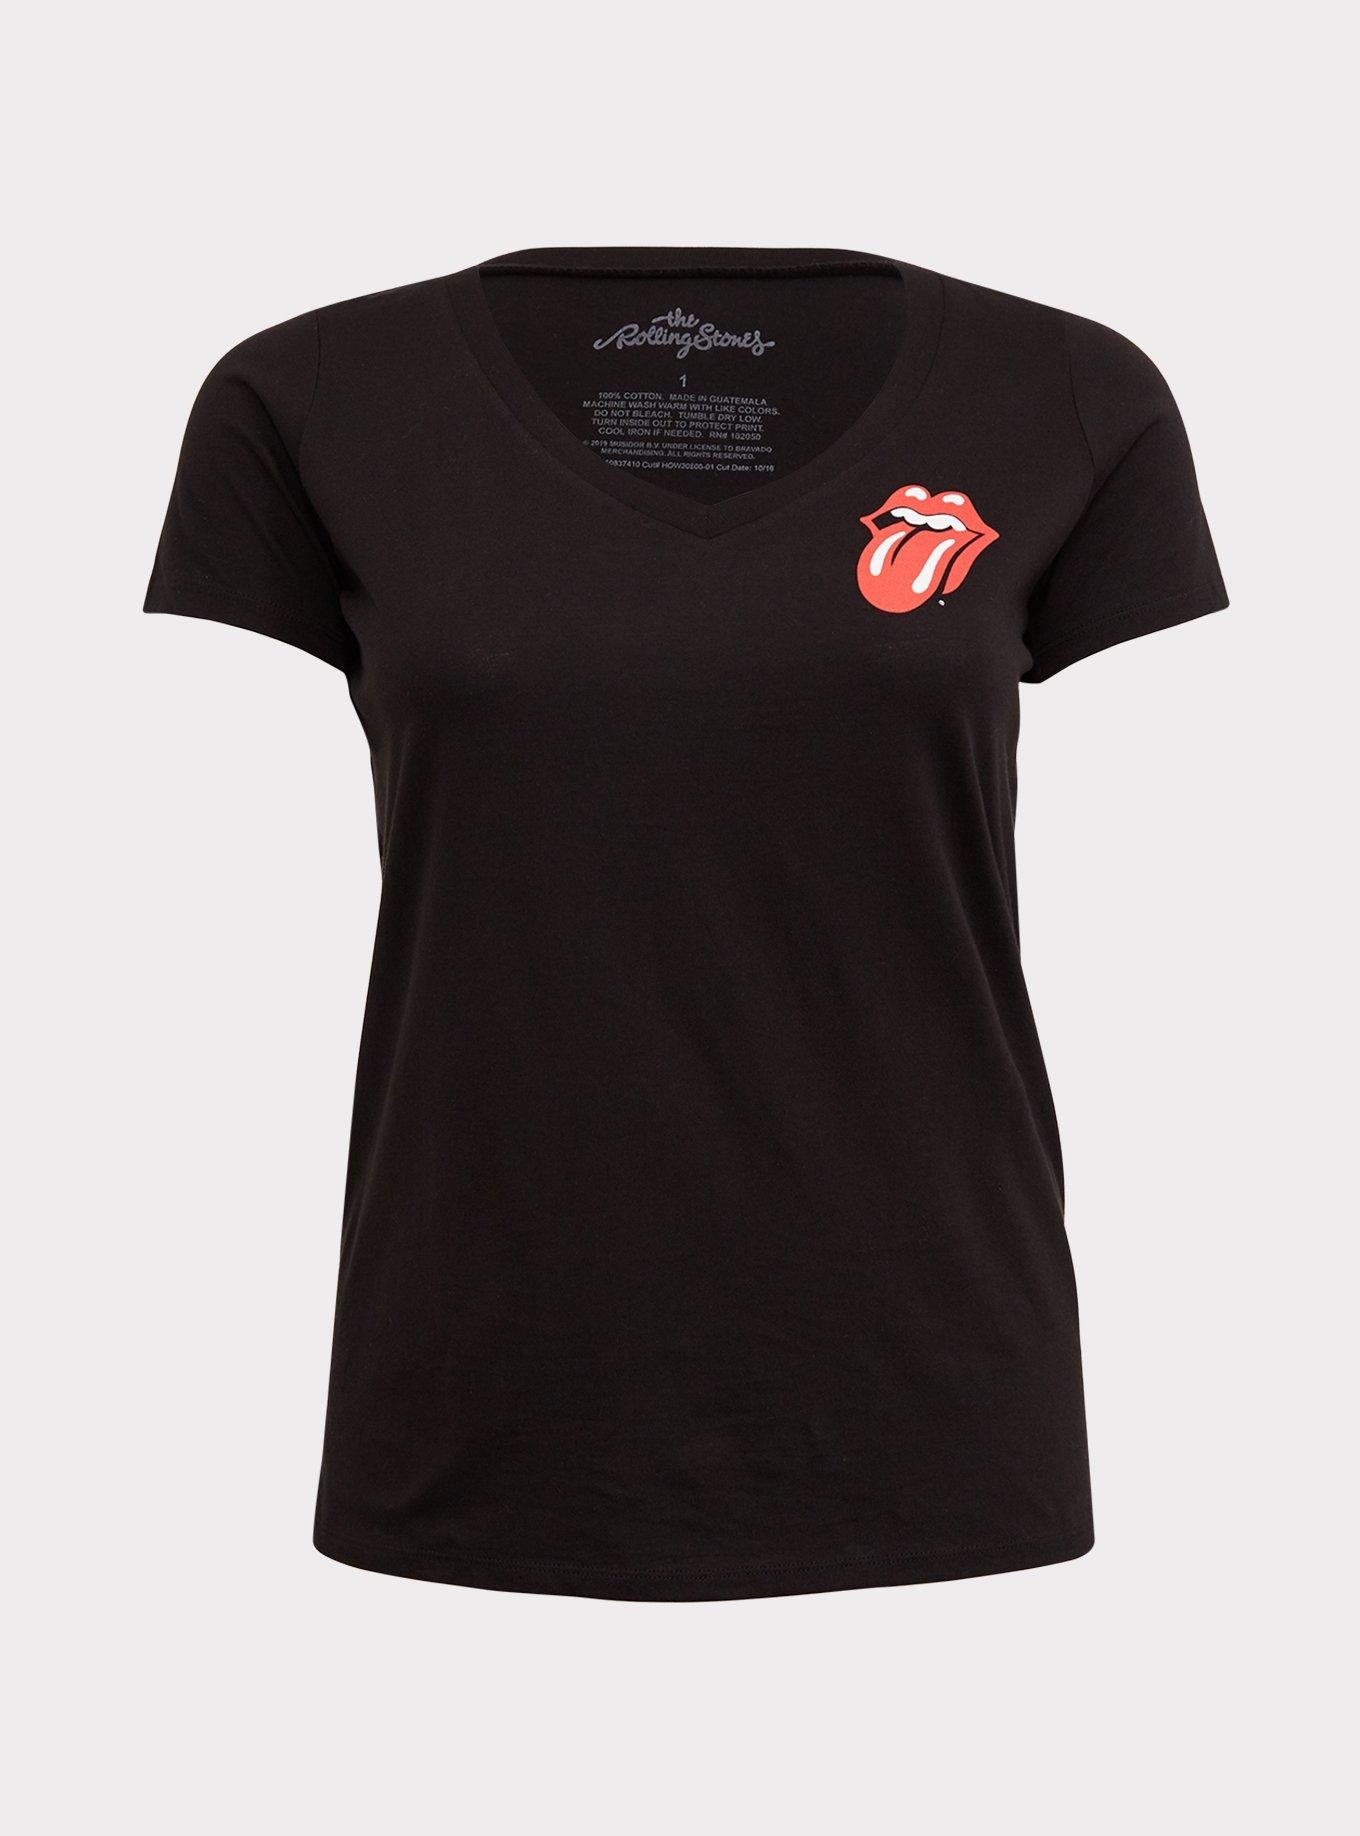 Plus Size - Rolling Stones V-Neck Tee - Torrid